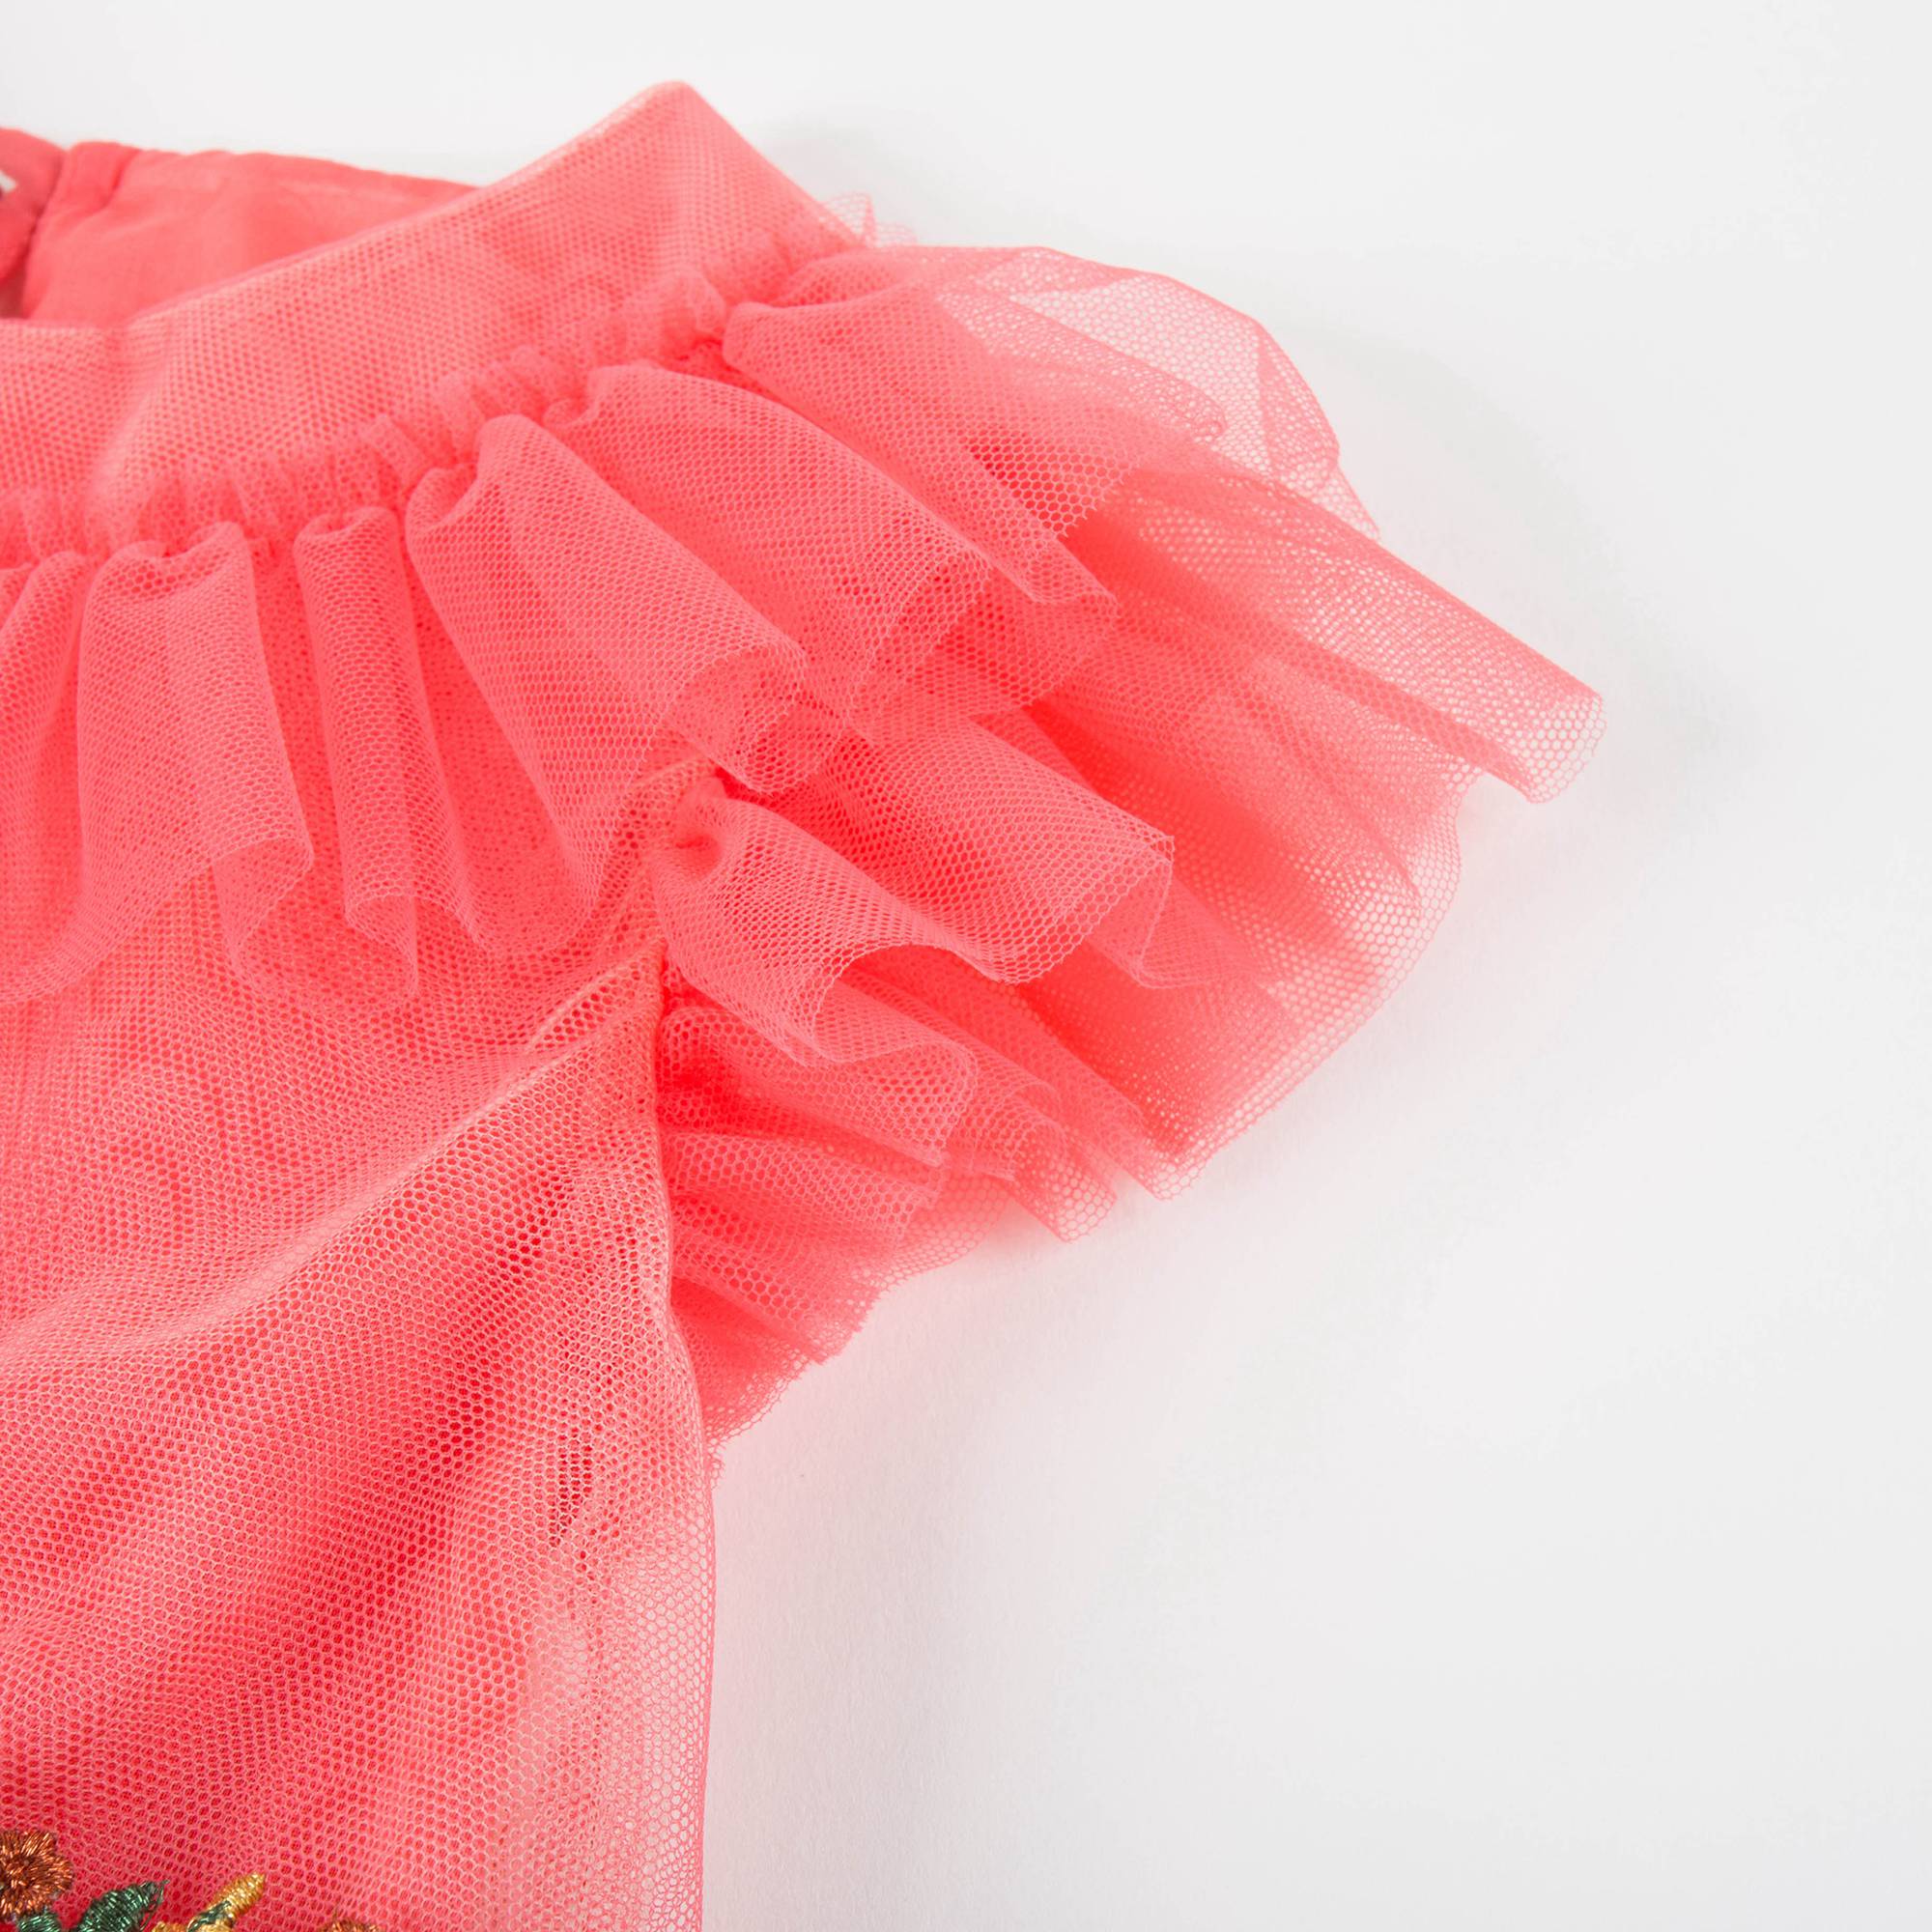 Baby Girls Rose Coral Dress